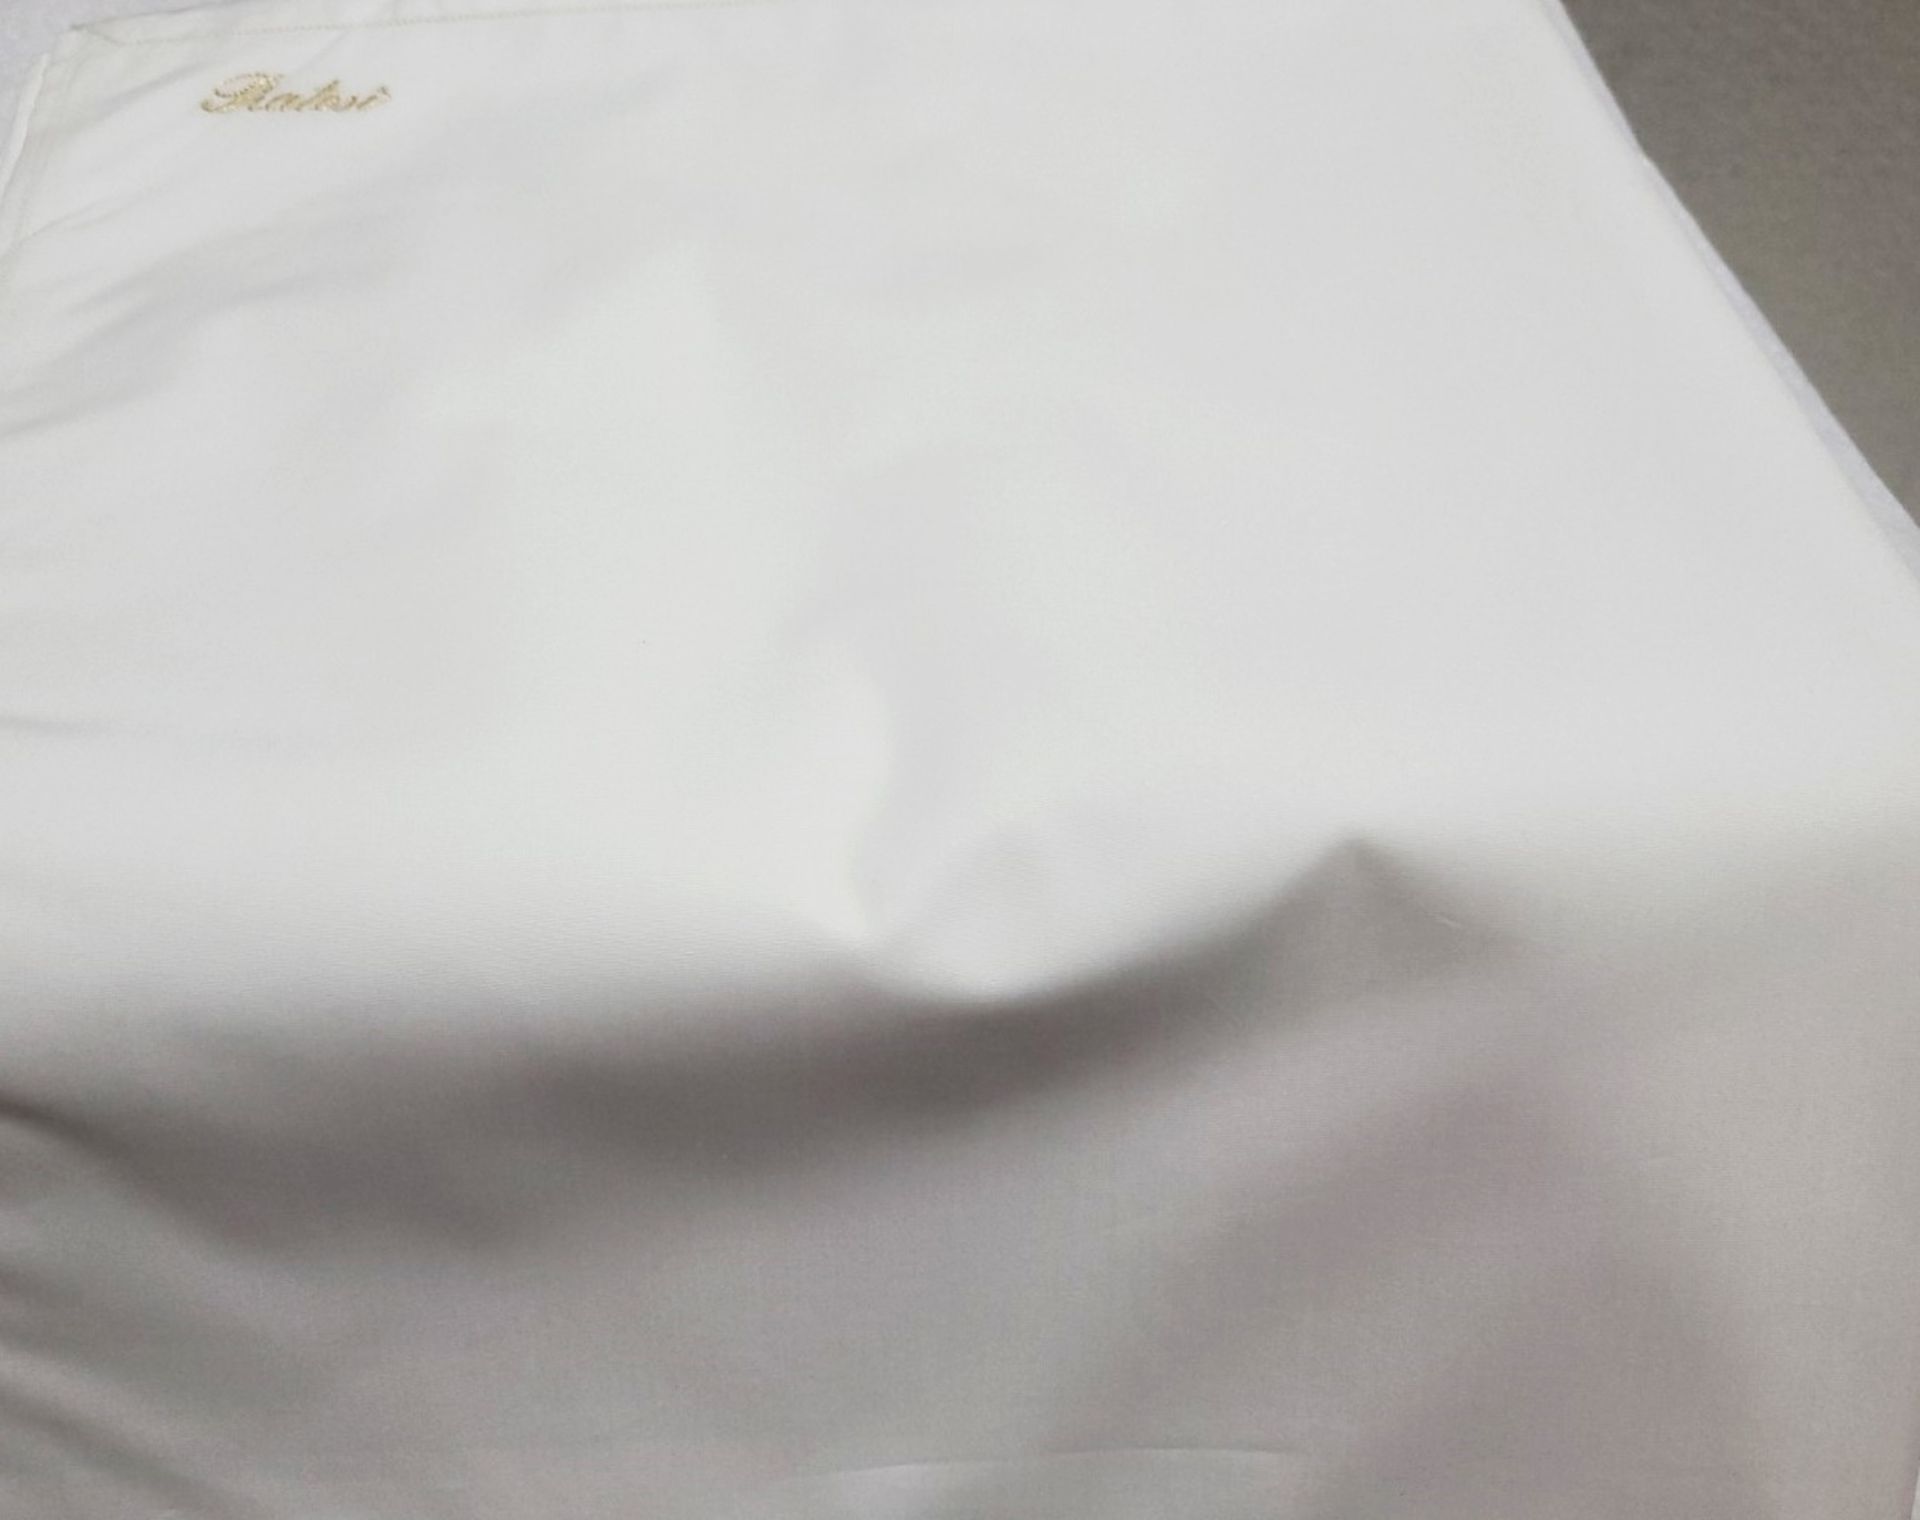 1 x PRATESI 'Paradise' Luxury Italian Flat Bottom Sheet In Angel Skin Cotton - 270x300 - RRP £1,050 - Image 4 of 6